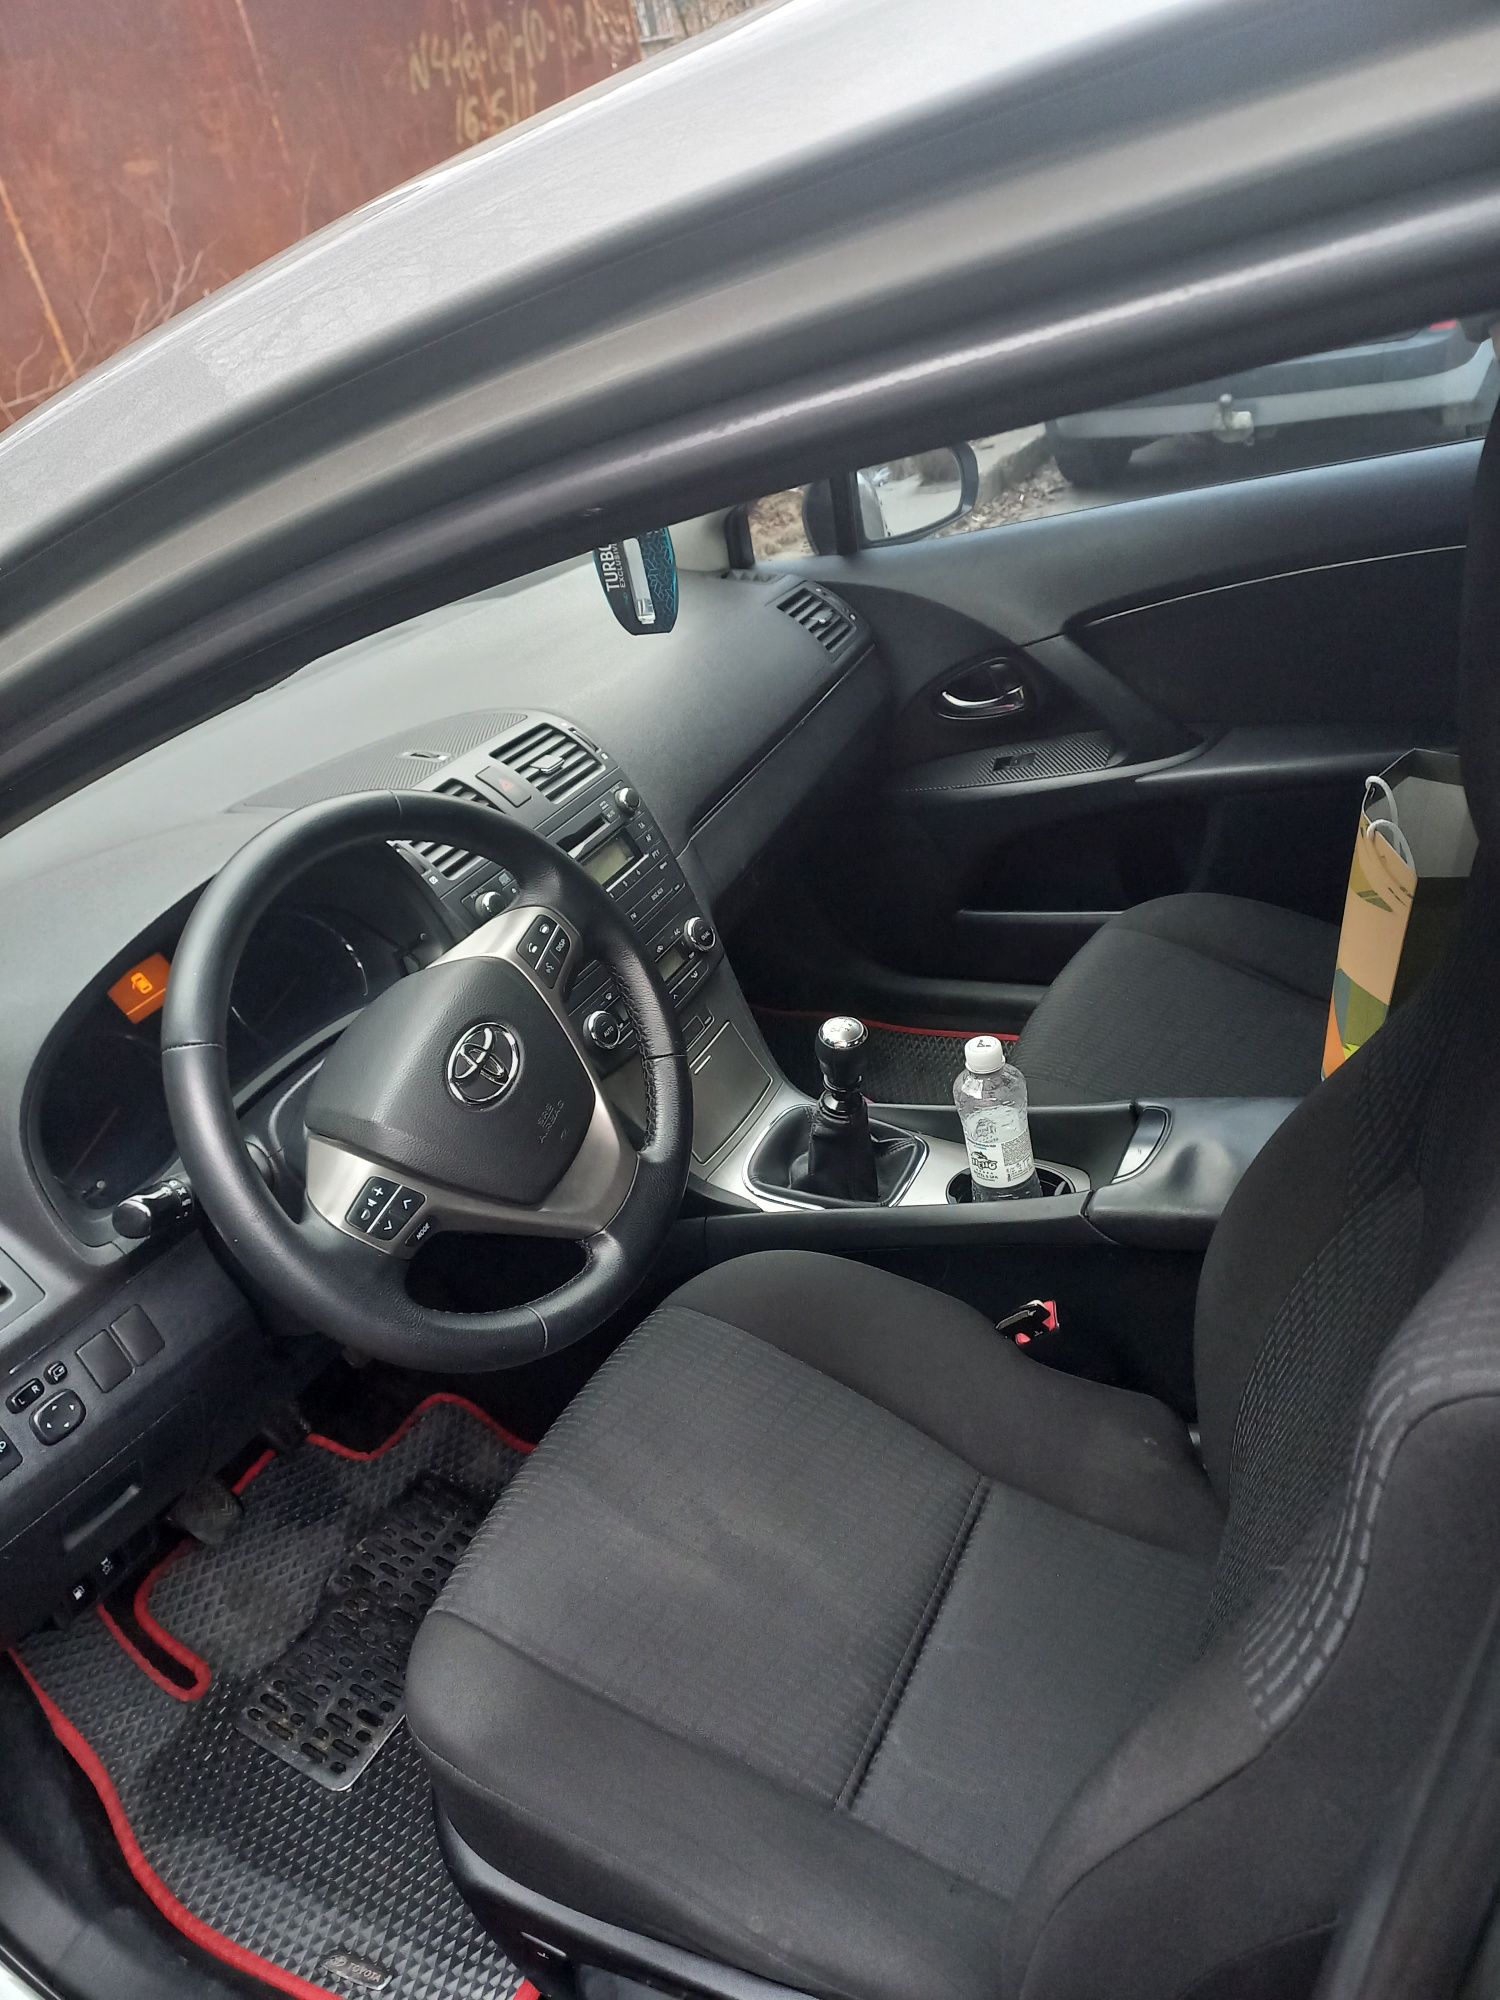 Продам машину Toyota Avensis 2011  газ/бензин